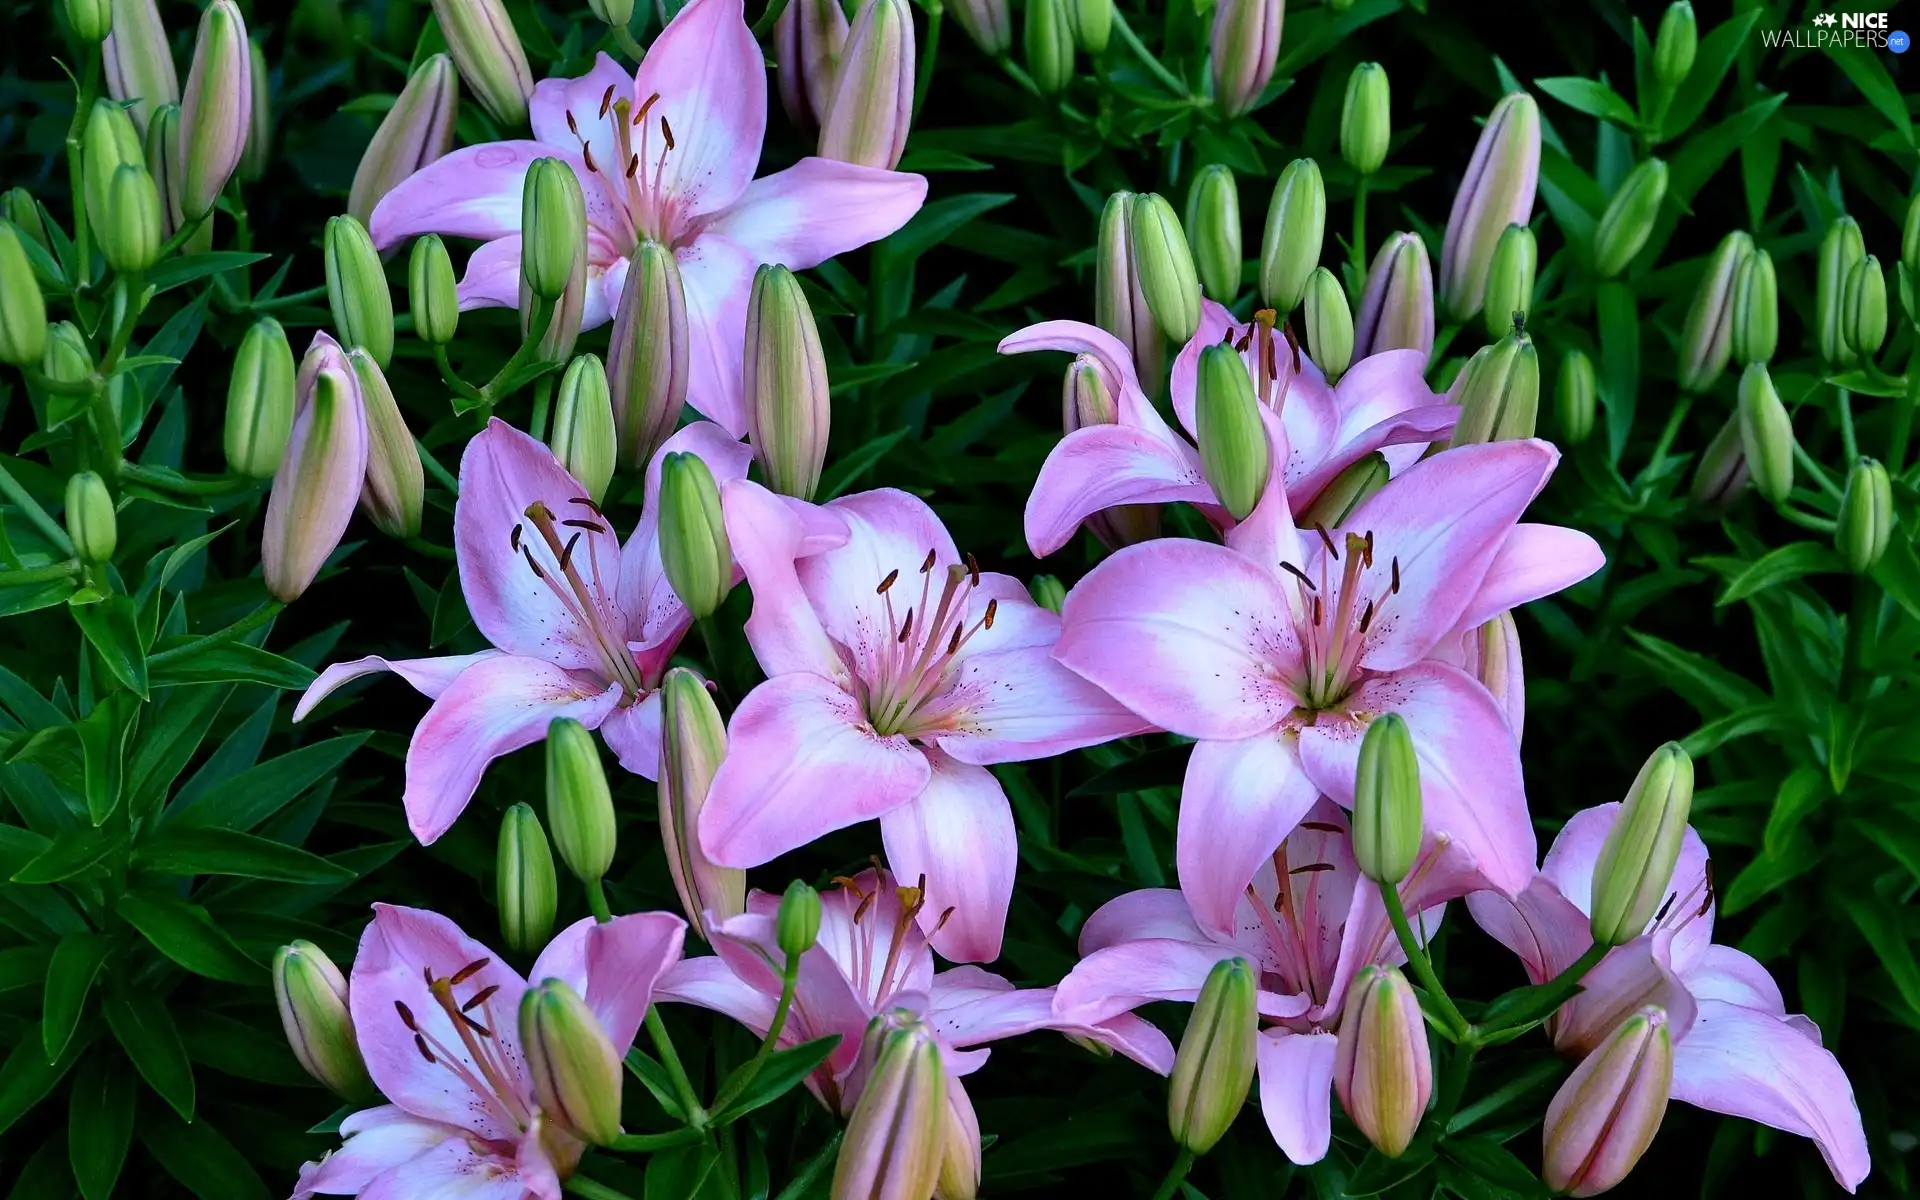 Flowers, lilies